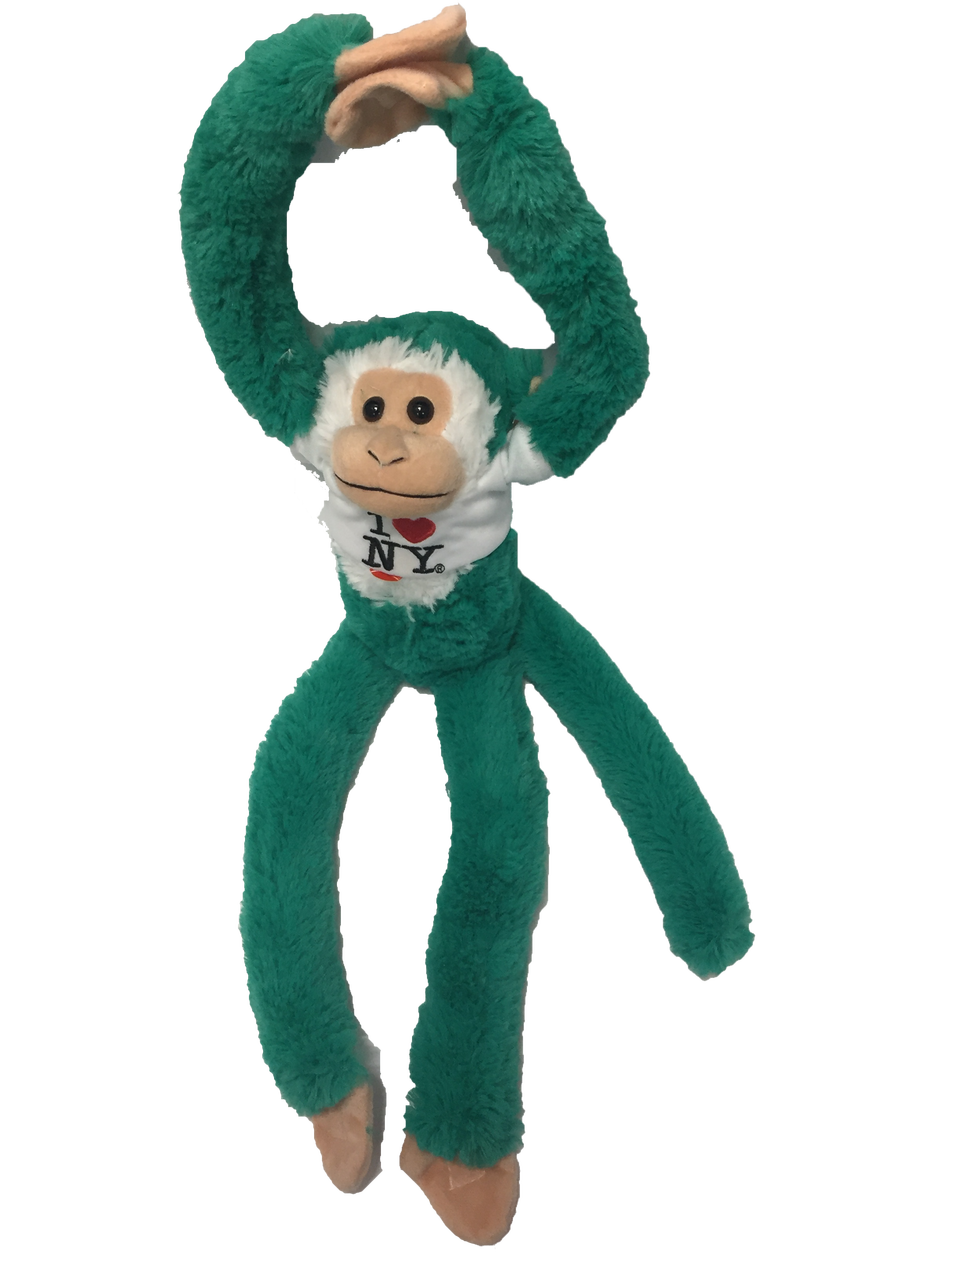 I Love NY Green Plush Screaming Monkey with Sparkly Eyes